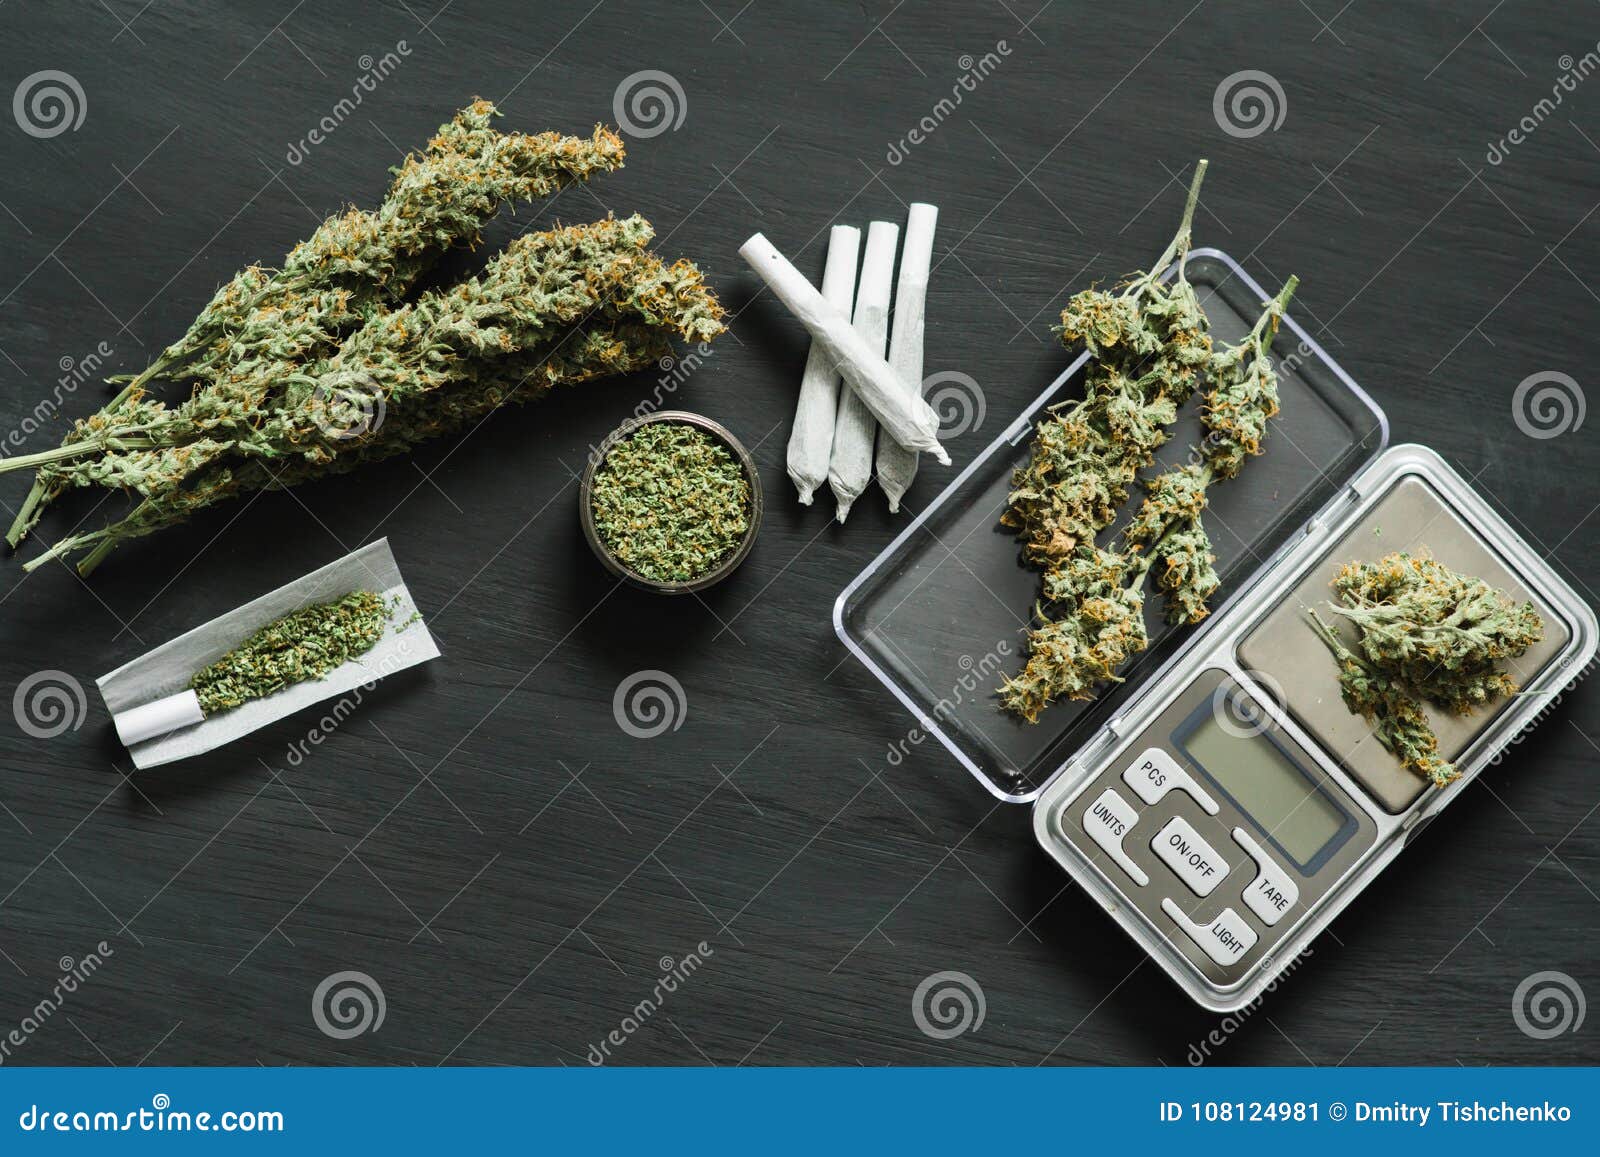 https://thumbs.dreamstime.com/z/marijuana-scales-jambs-cannabis-grinder-weed-black-wooden-table-top-view-108124981.jpg